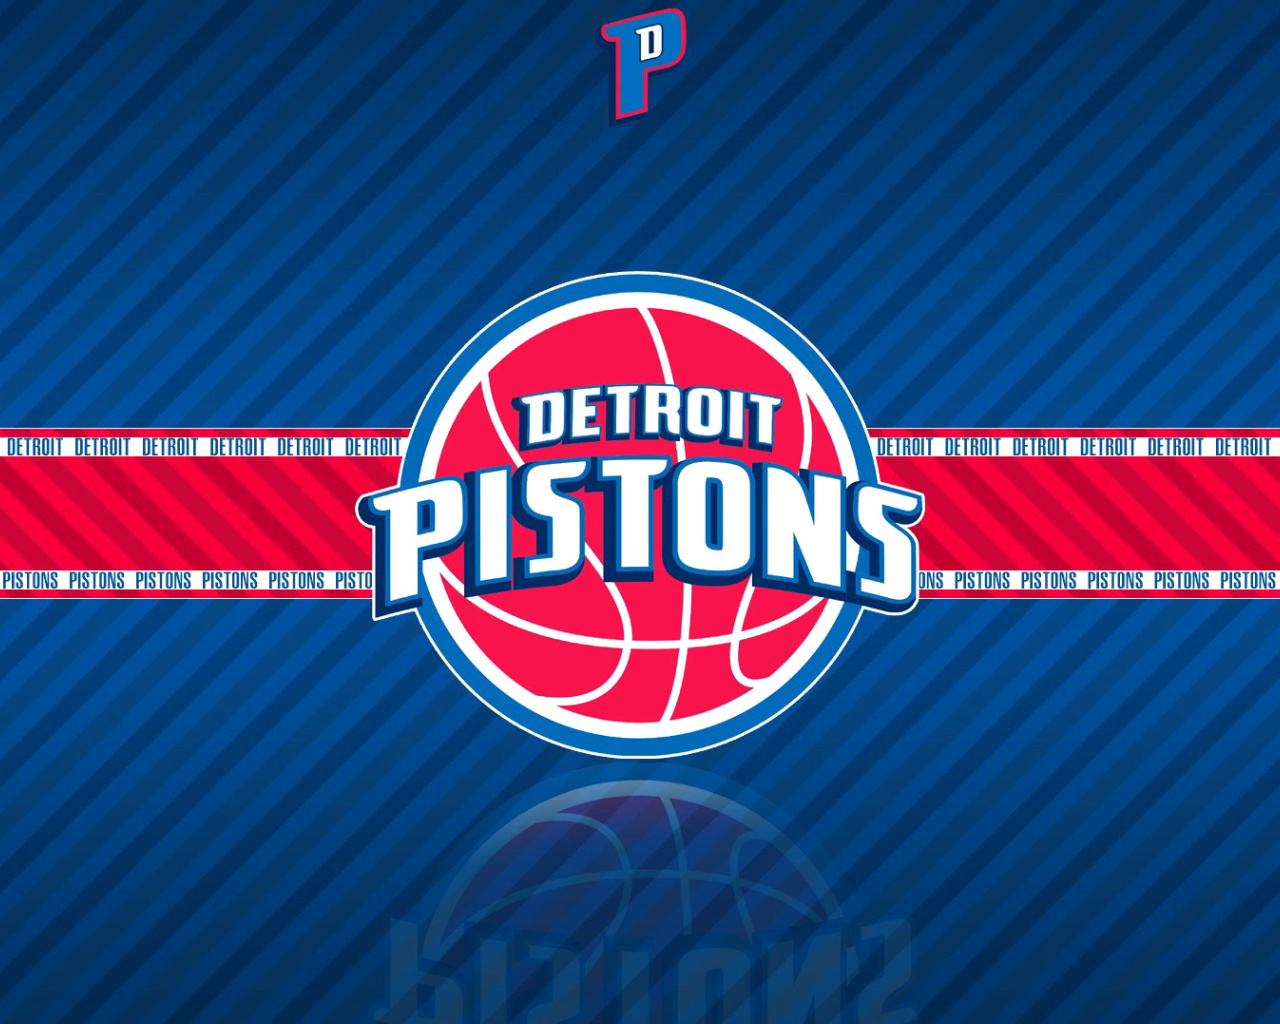 Detroit Pistons wallpaper 1280x1024